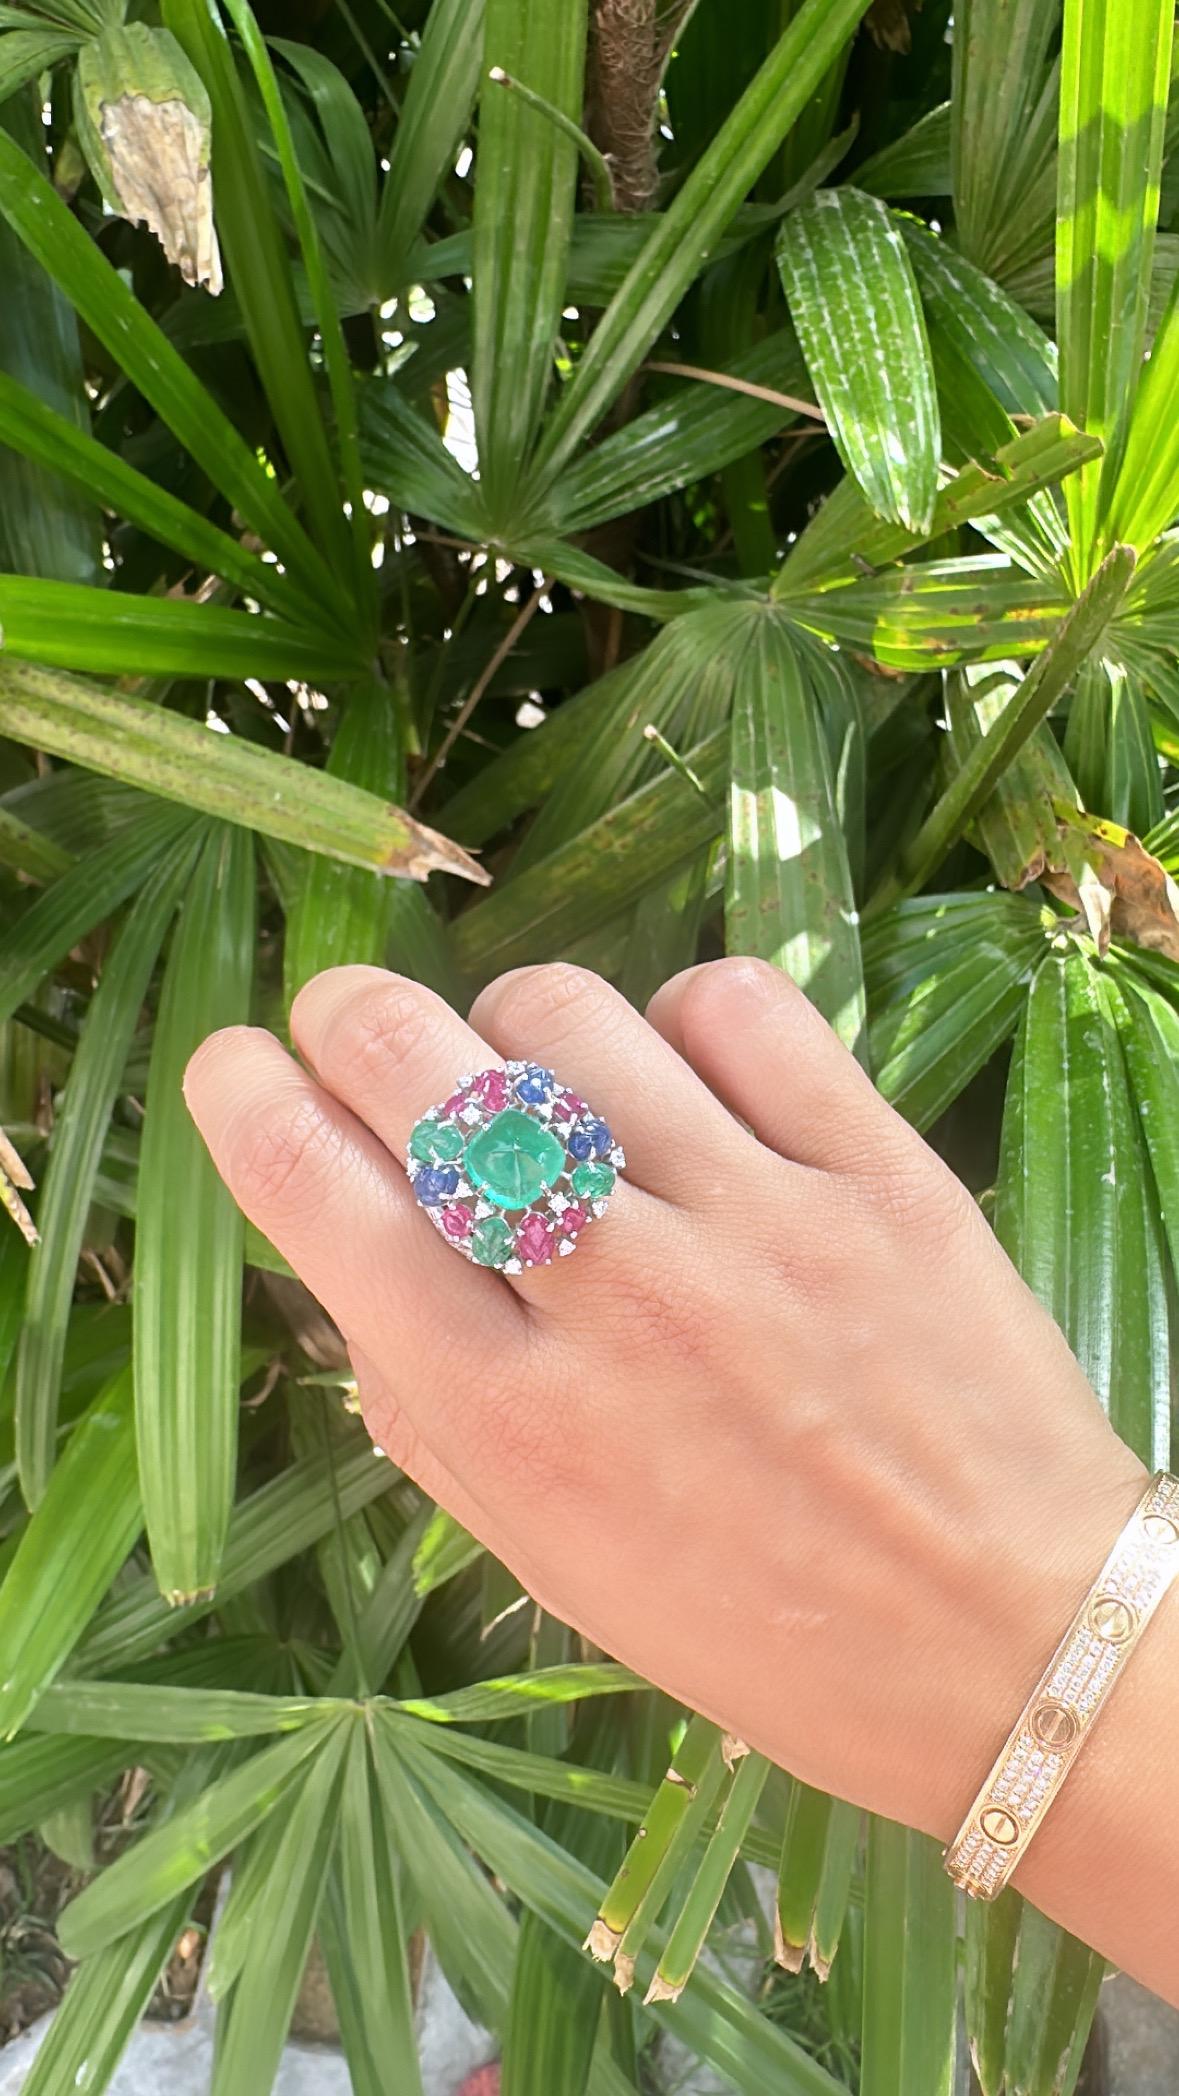 In 18K Gold, Emeralds, Ruby, Blue Sapphire & Diamonds Tutti Frutti Cocktail Ring For Sale 2